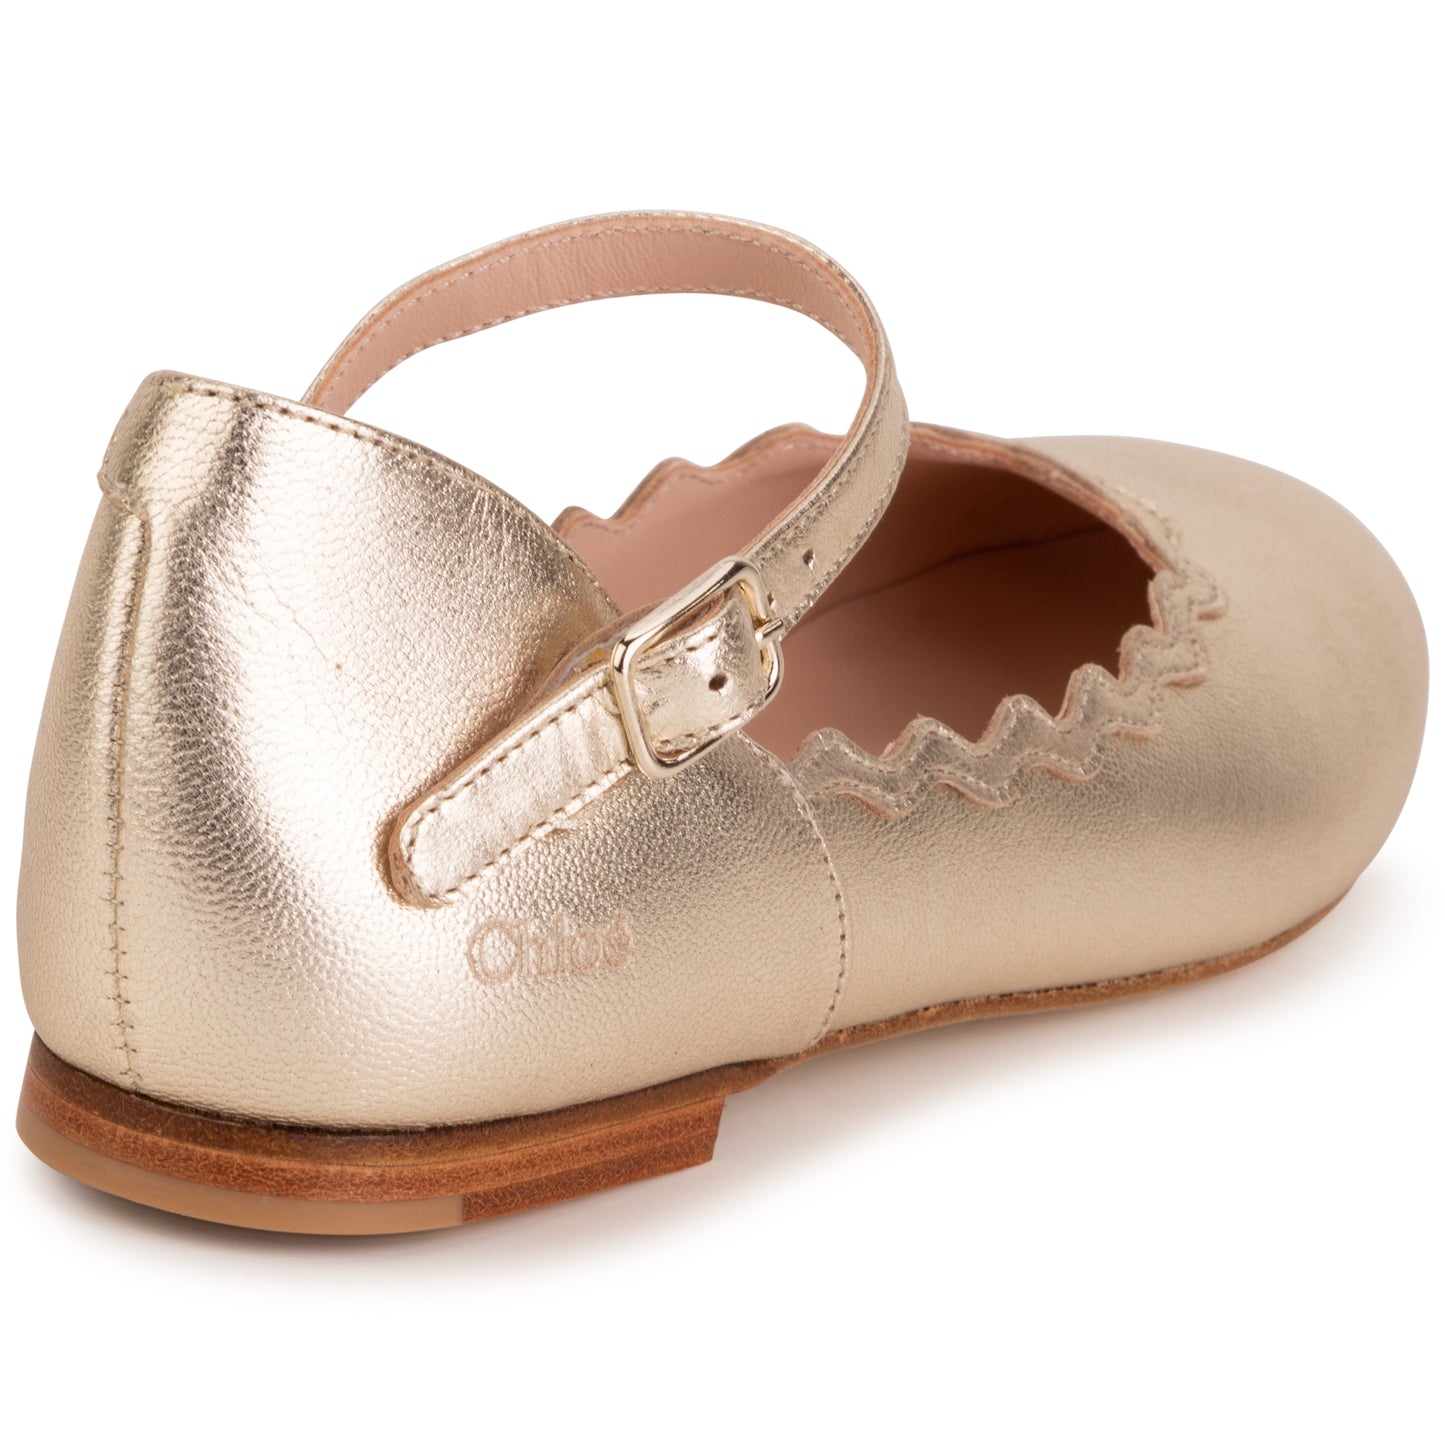 Chloe Ballerina Shoes  Rose Gold_C19149-32C